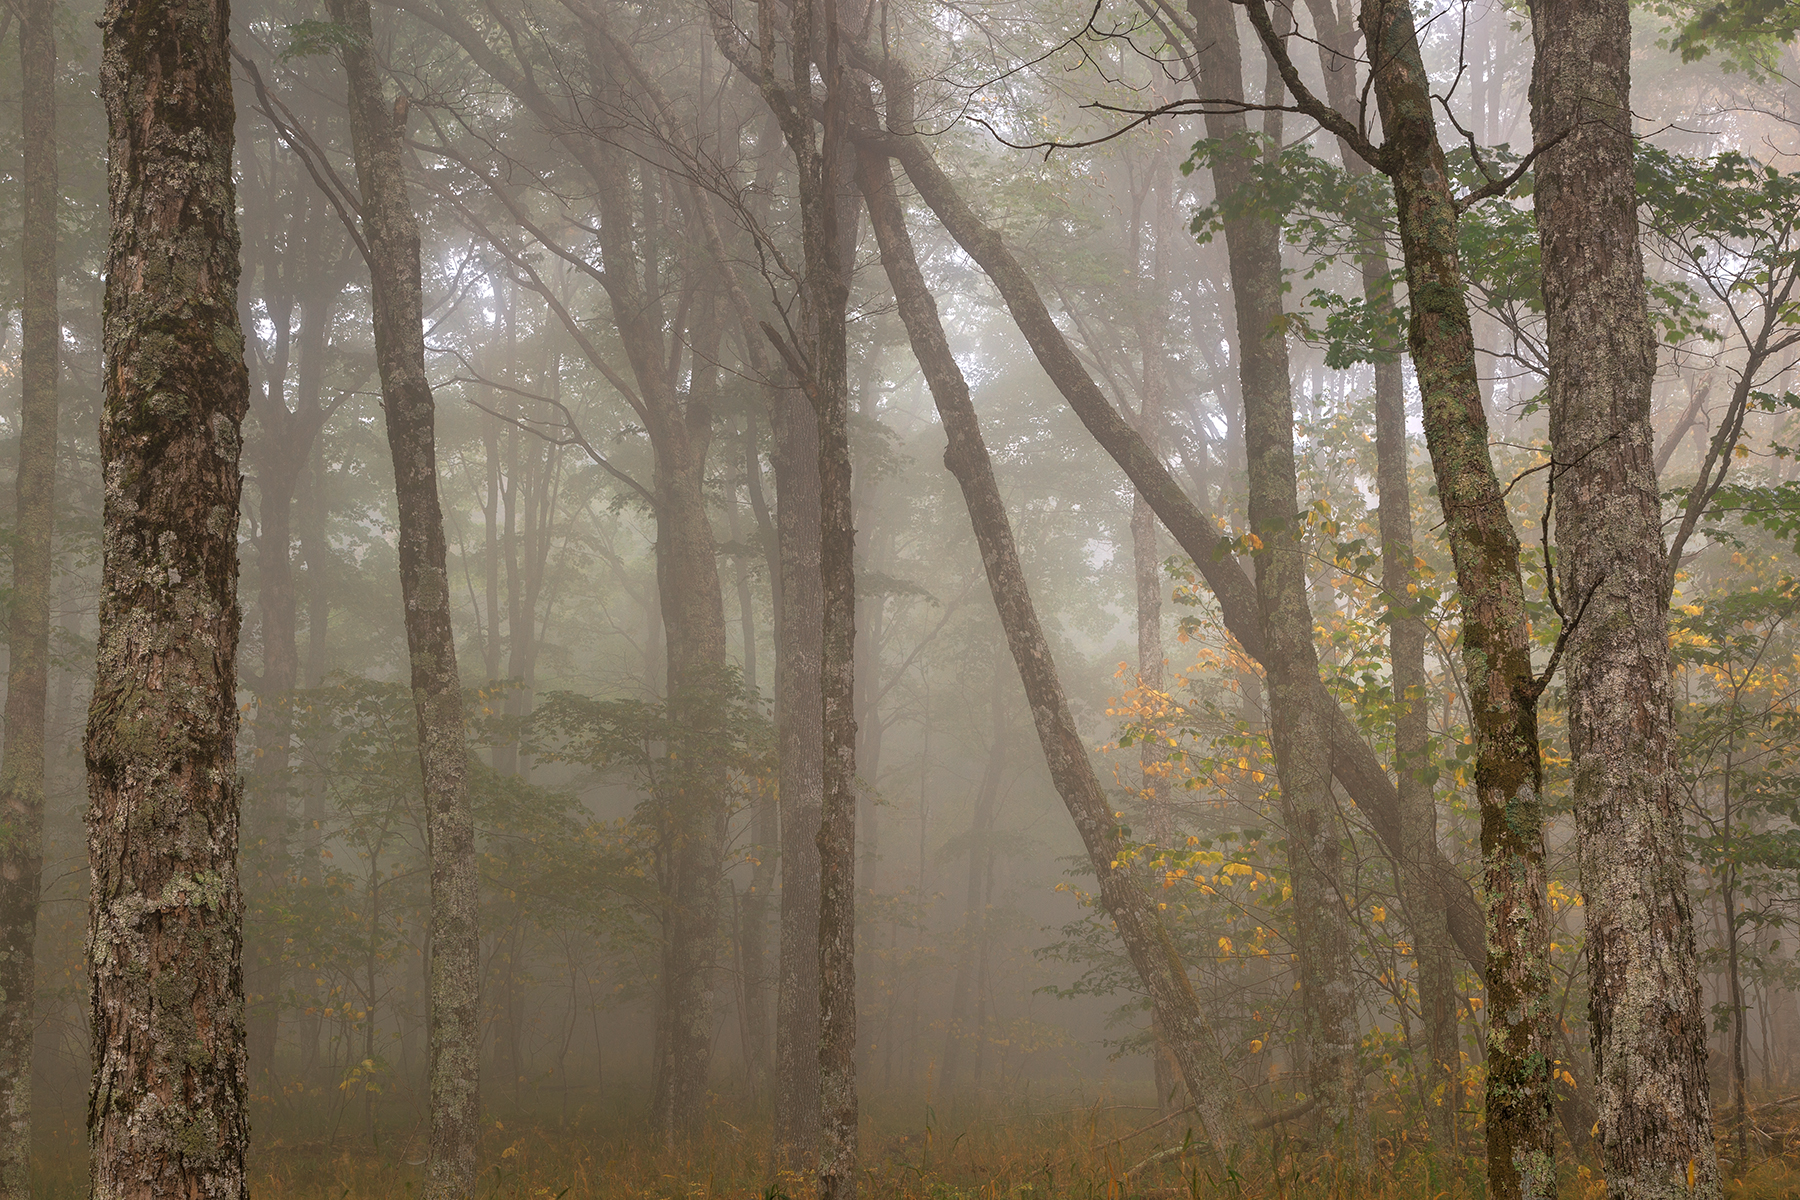 Misty spruce knob forest - hdr photo